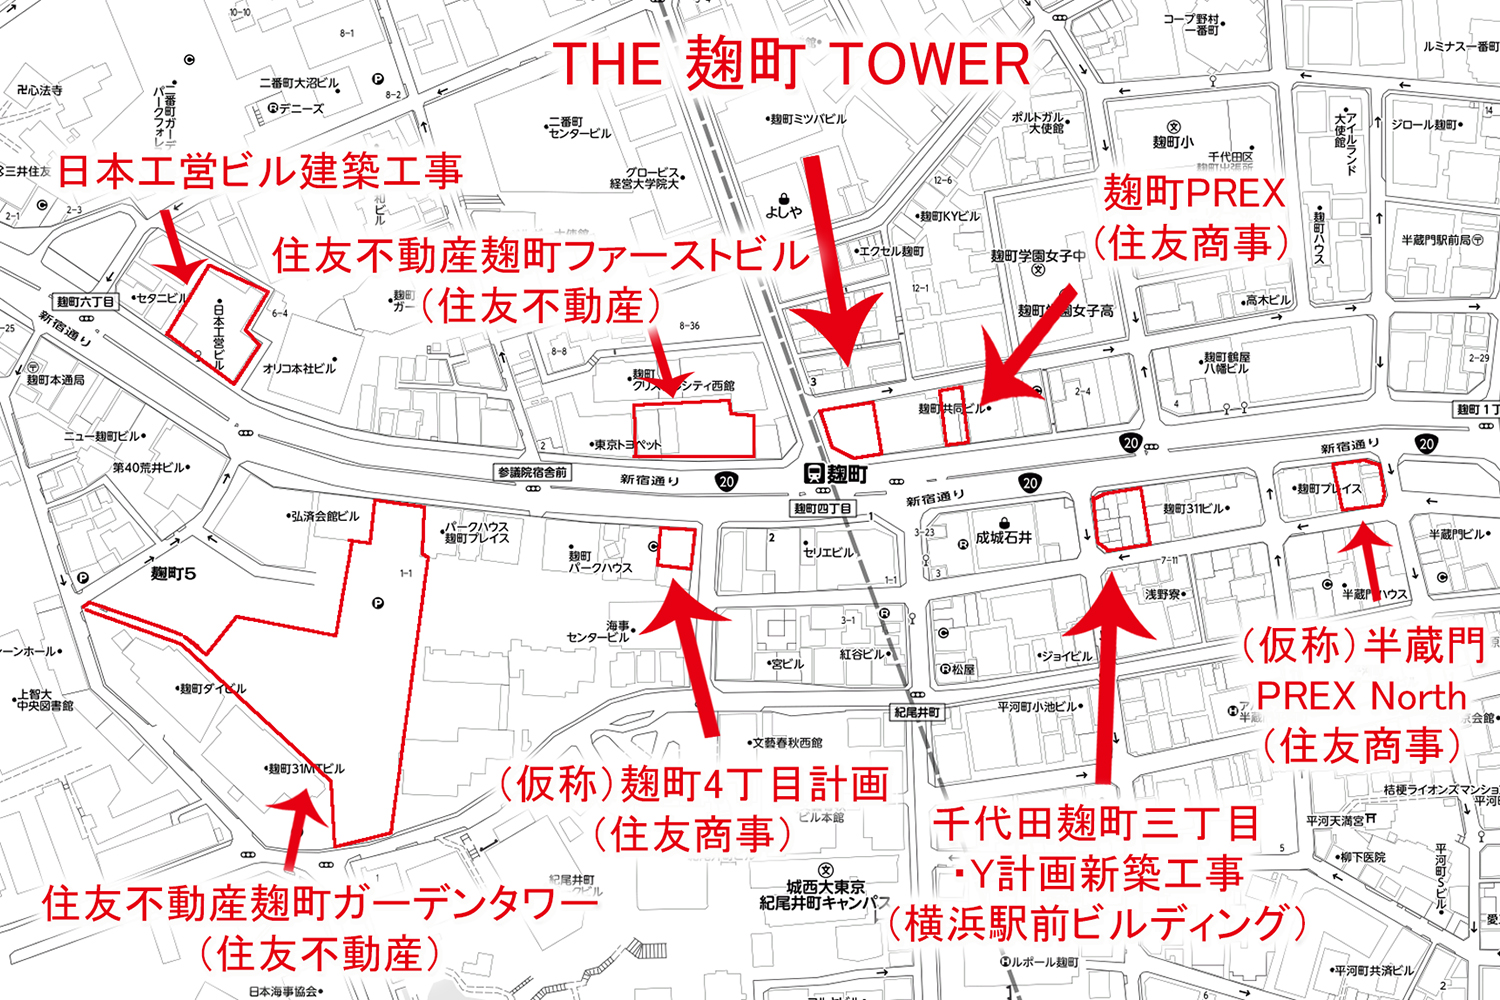 The 千代田麹町 Tower